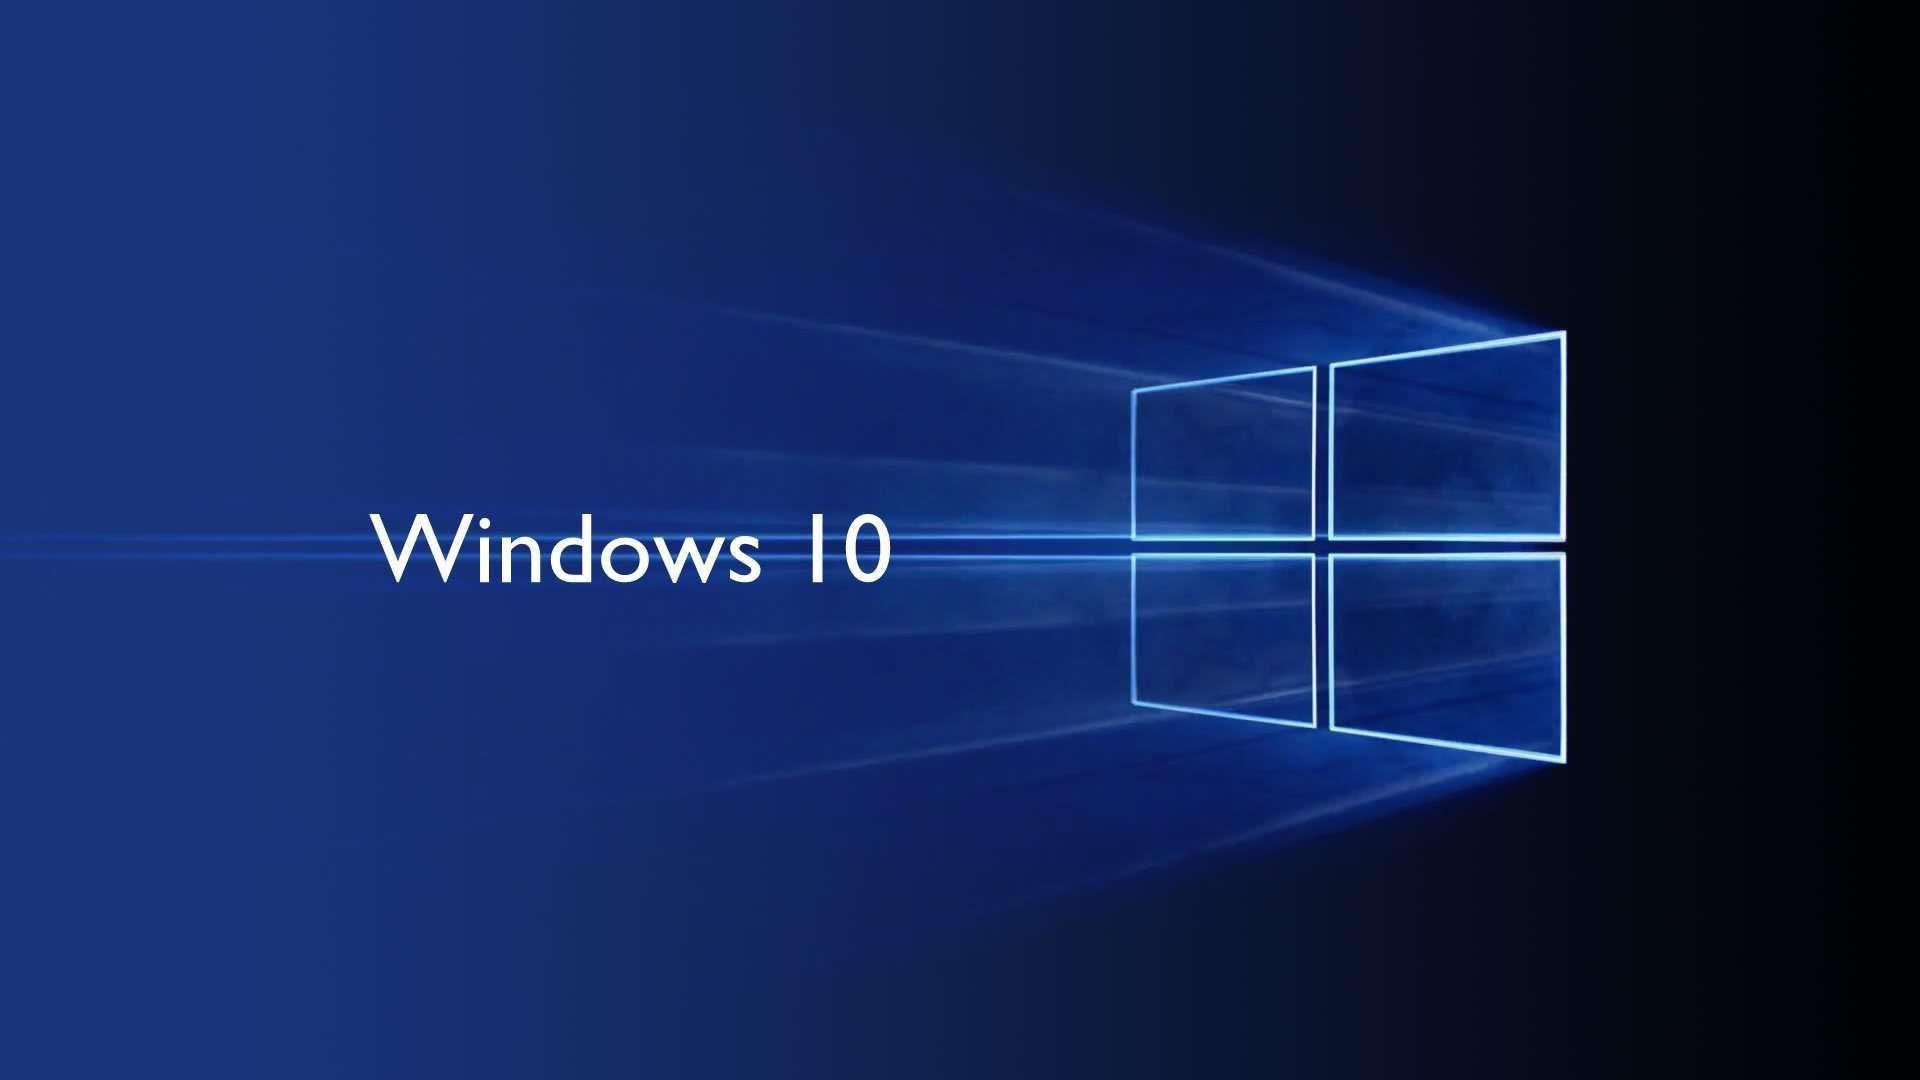 1920x1080 Windows 10 Hd Desktop 1080p